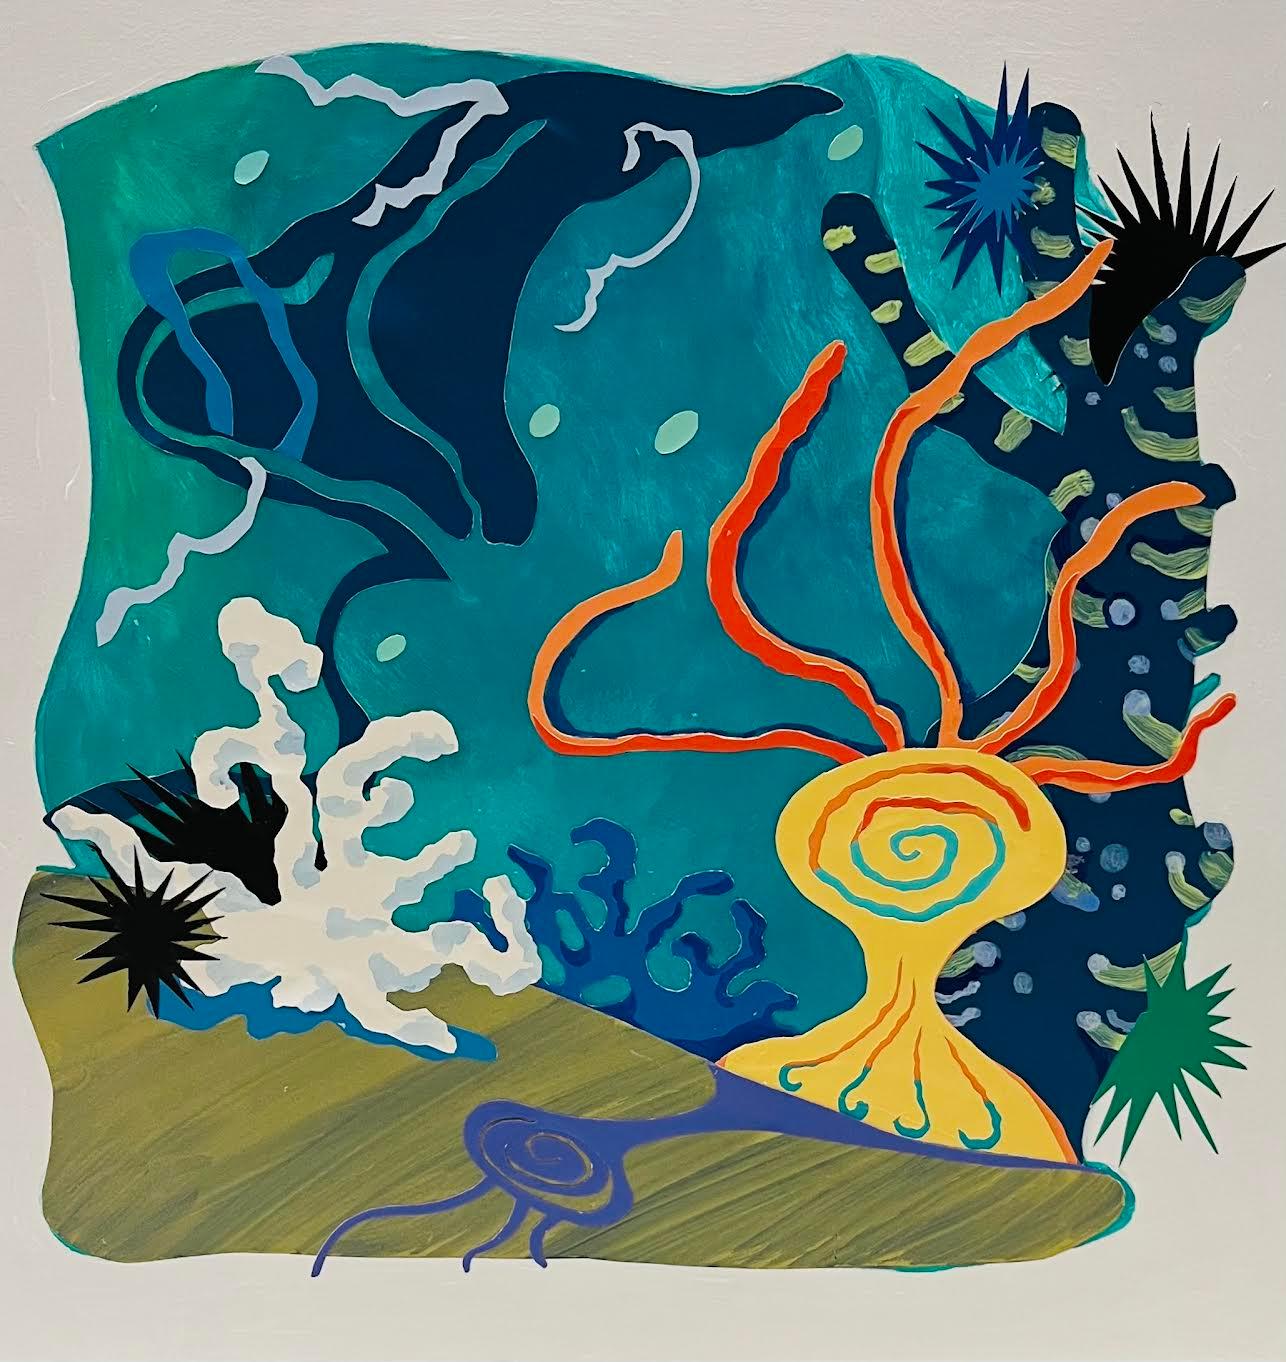 Phantastisch, schillernde, farbenfrohe, phantasievolle undersea fantasy aquatische Bewegung – Mixed Media Art von Philomena Marano